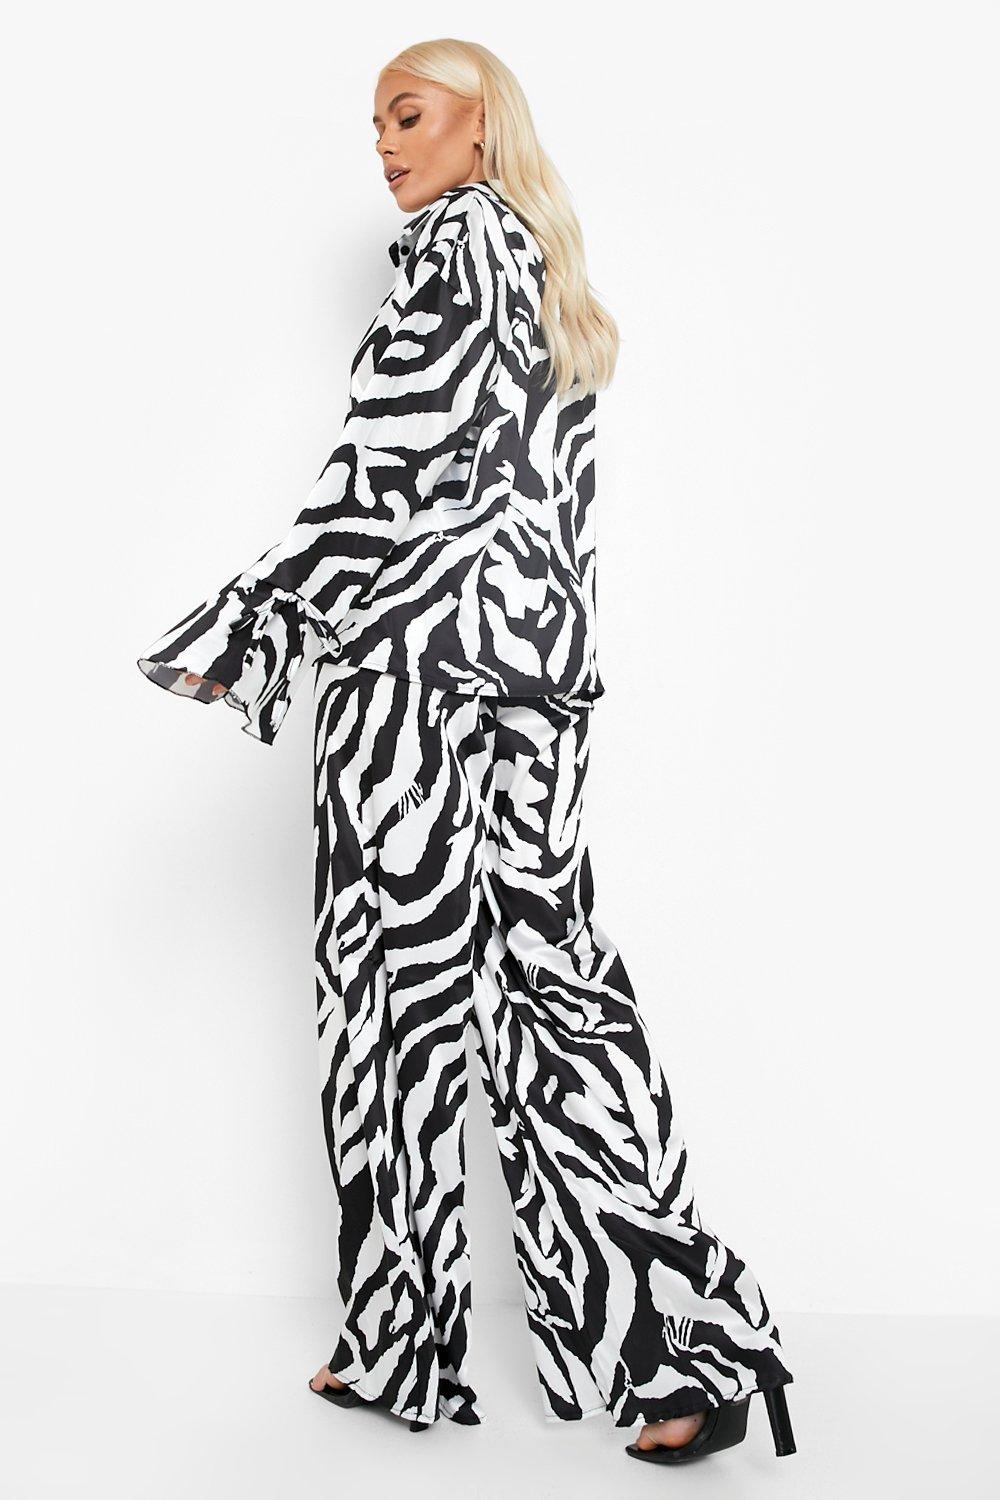 Black/White Satin Zebra Print Flared Trousers - ShopperBoard